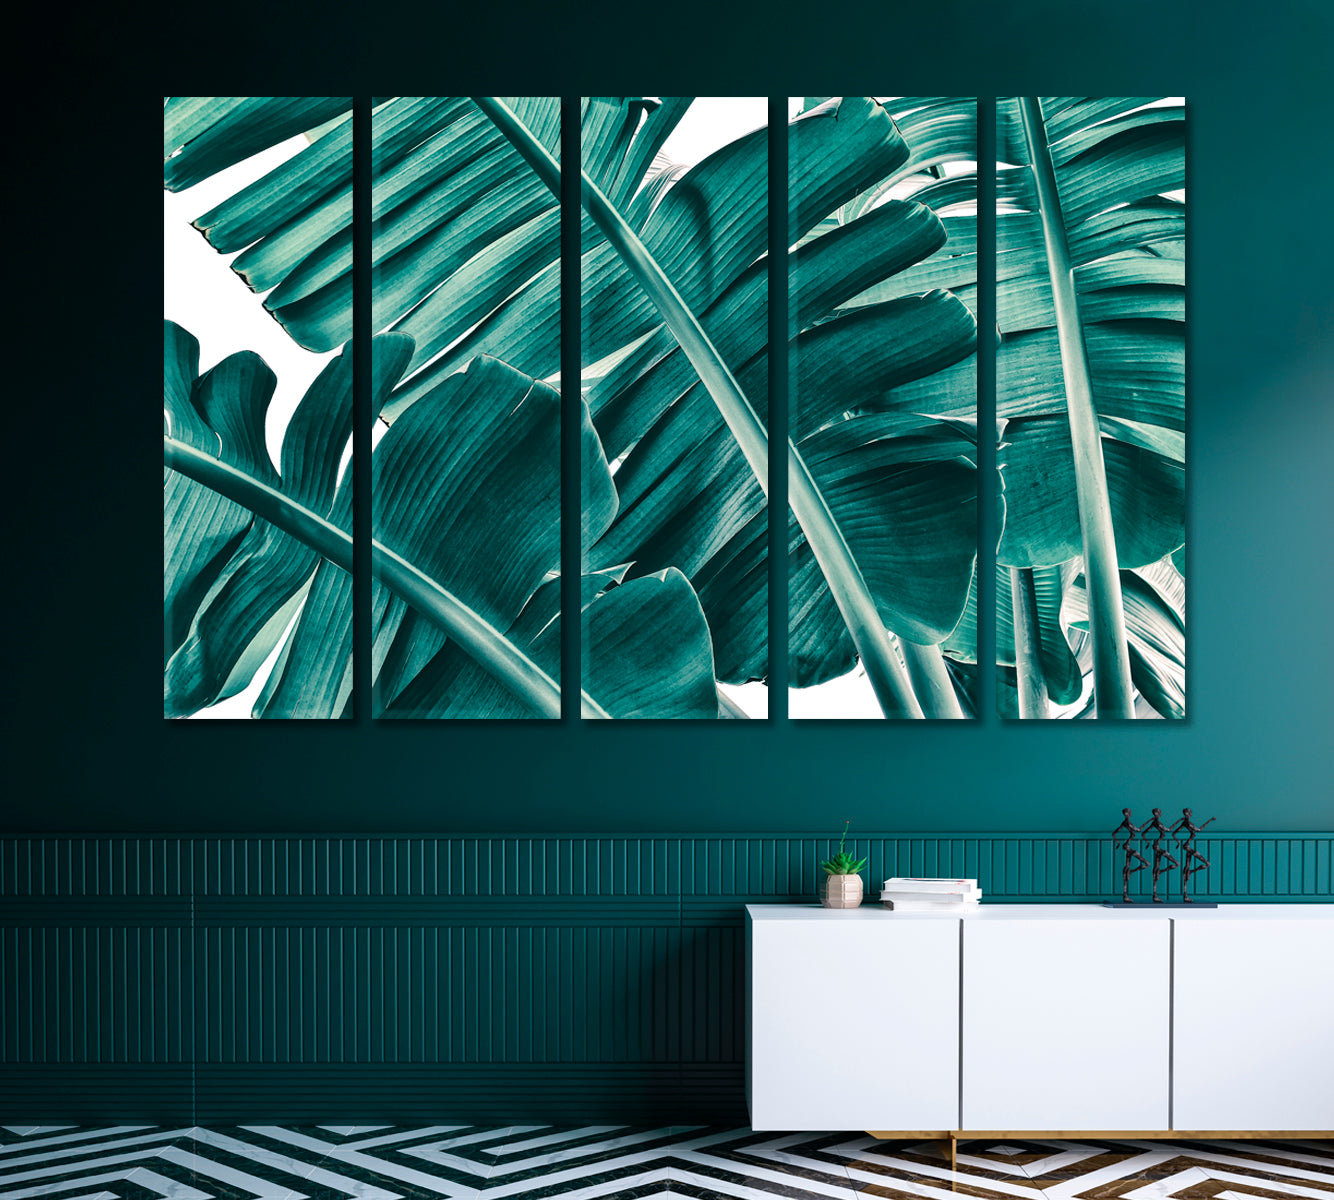 Banana Leaves Canvas Print-Canvas Print-CetArt-1 Panel-24x16 inches-CetArt